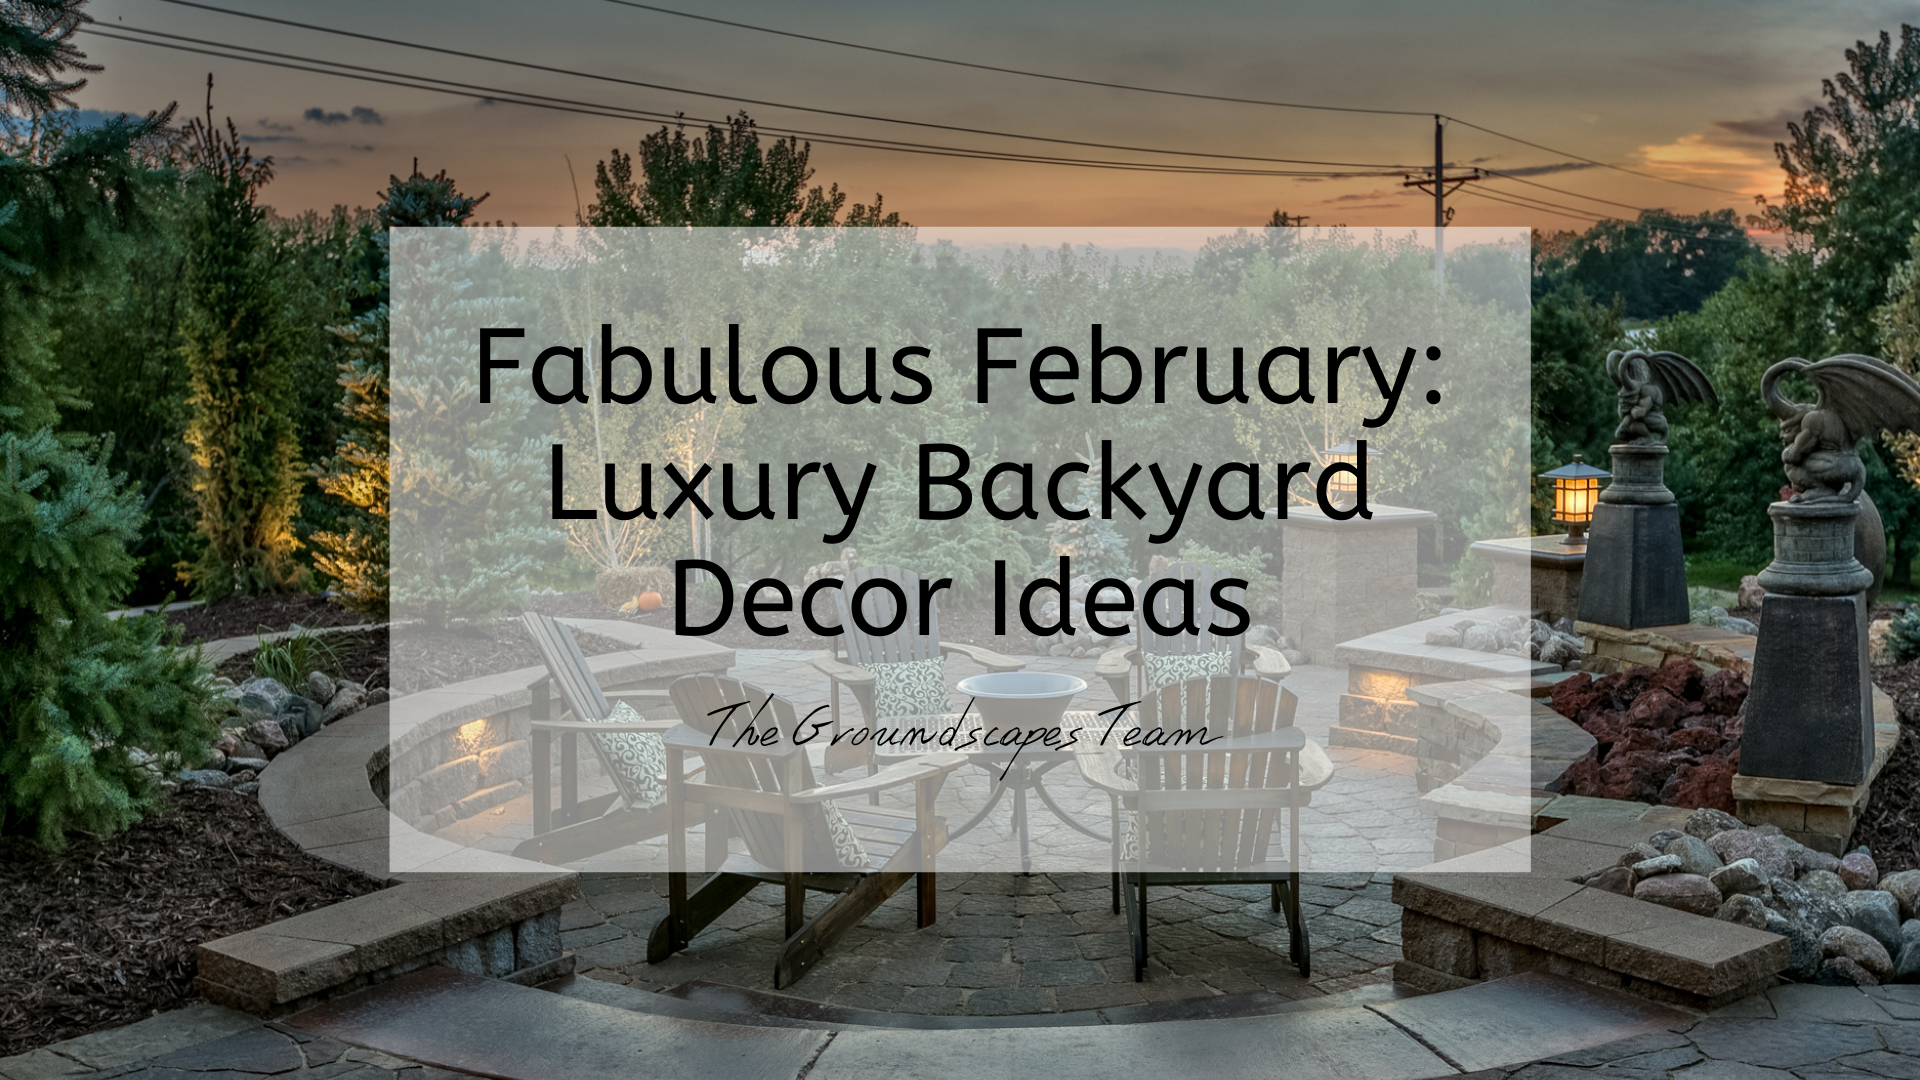 Fabulous February: Luxury Backyard Decor Ideas